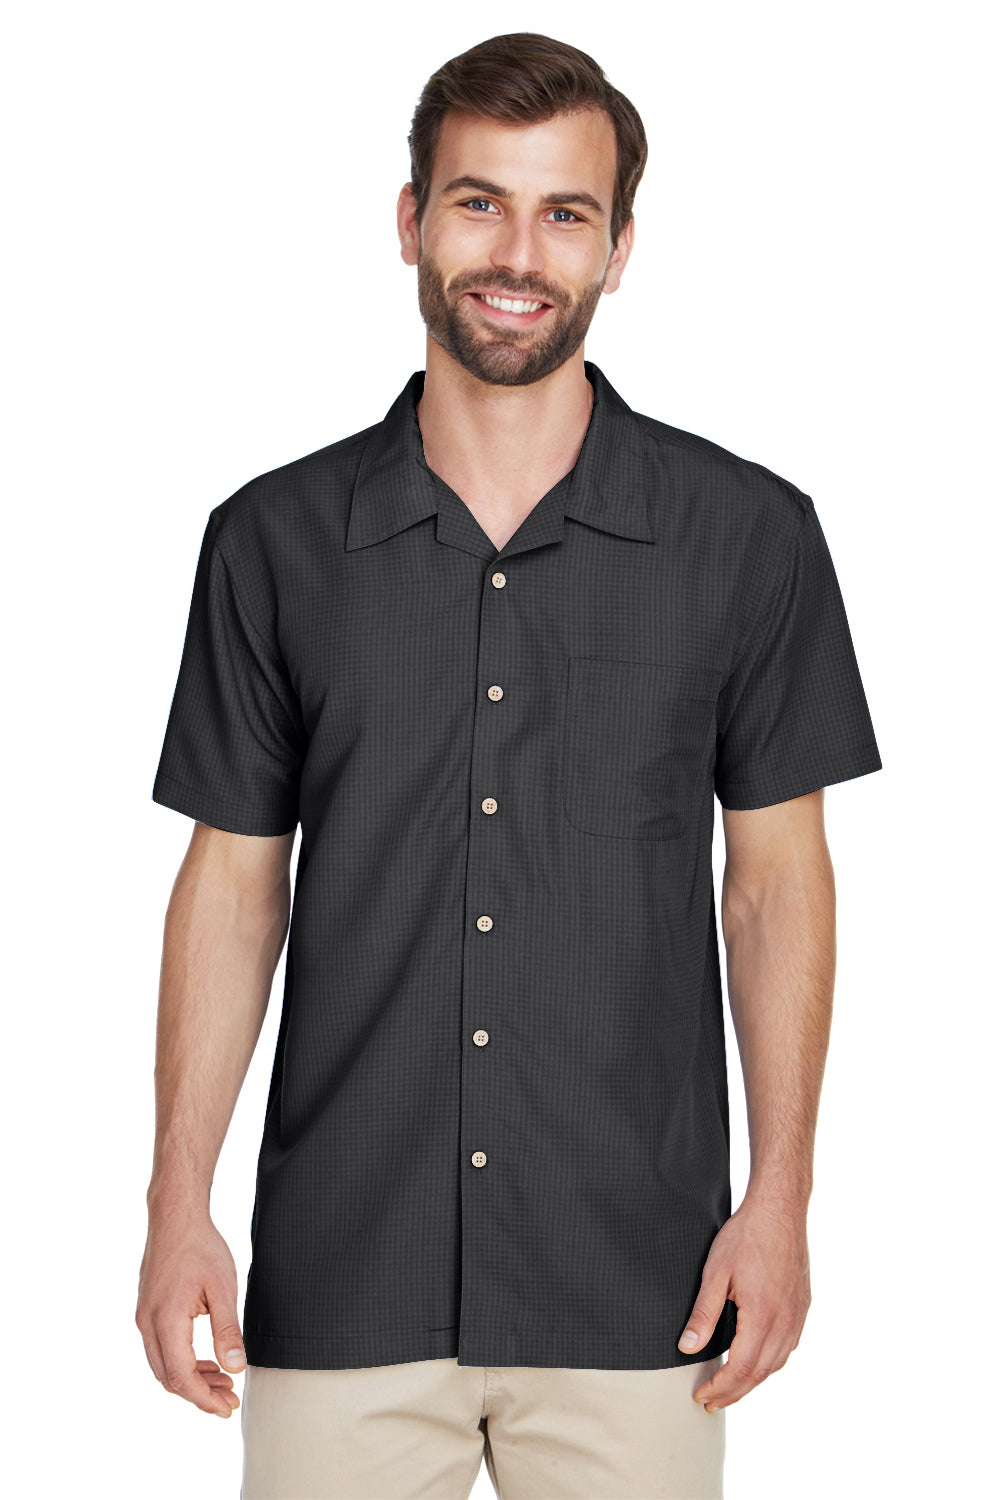 Harriton M560 Mens Barbados Wrinkle Resistant Short Sleeve Button Down Camp Shirt w/ Pocket Black Front